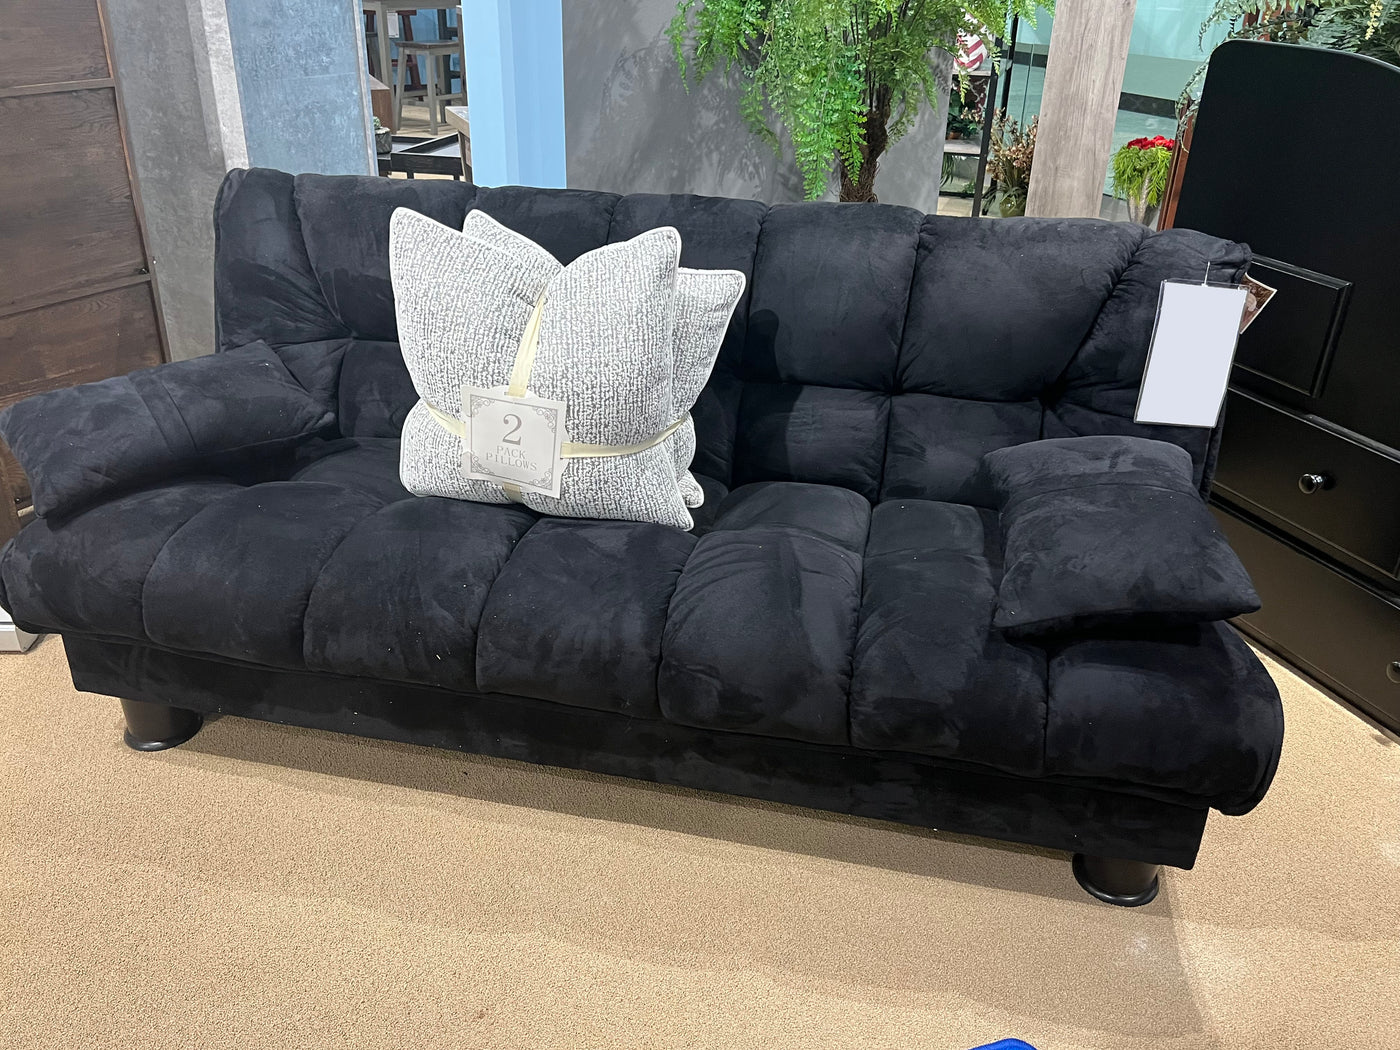 Bonifa Futon Sofa Bed (Black) – Fully Furnished